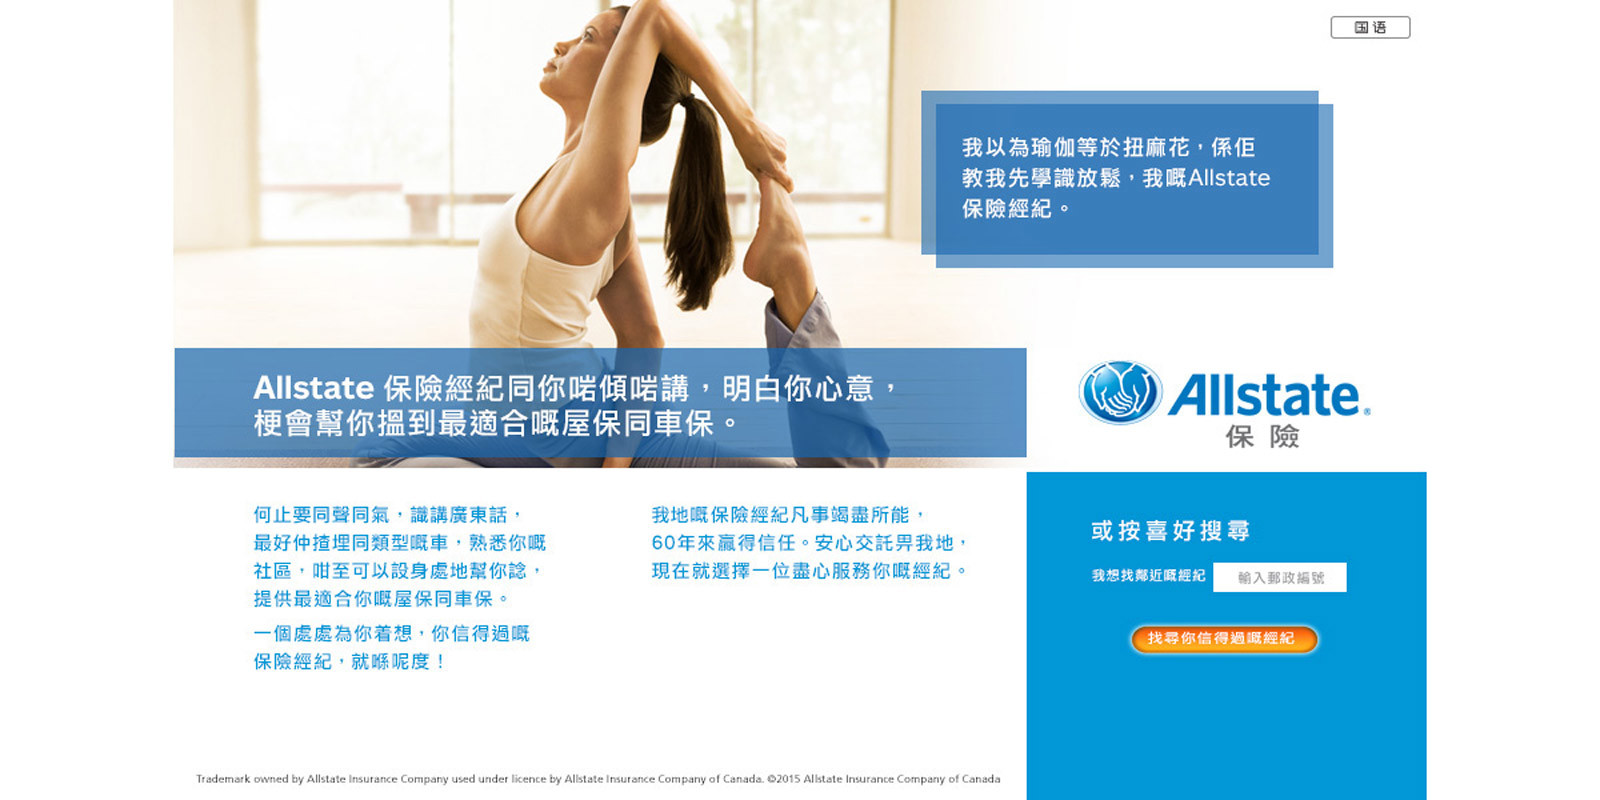 Allstate Chinese Yoga Landing Page